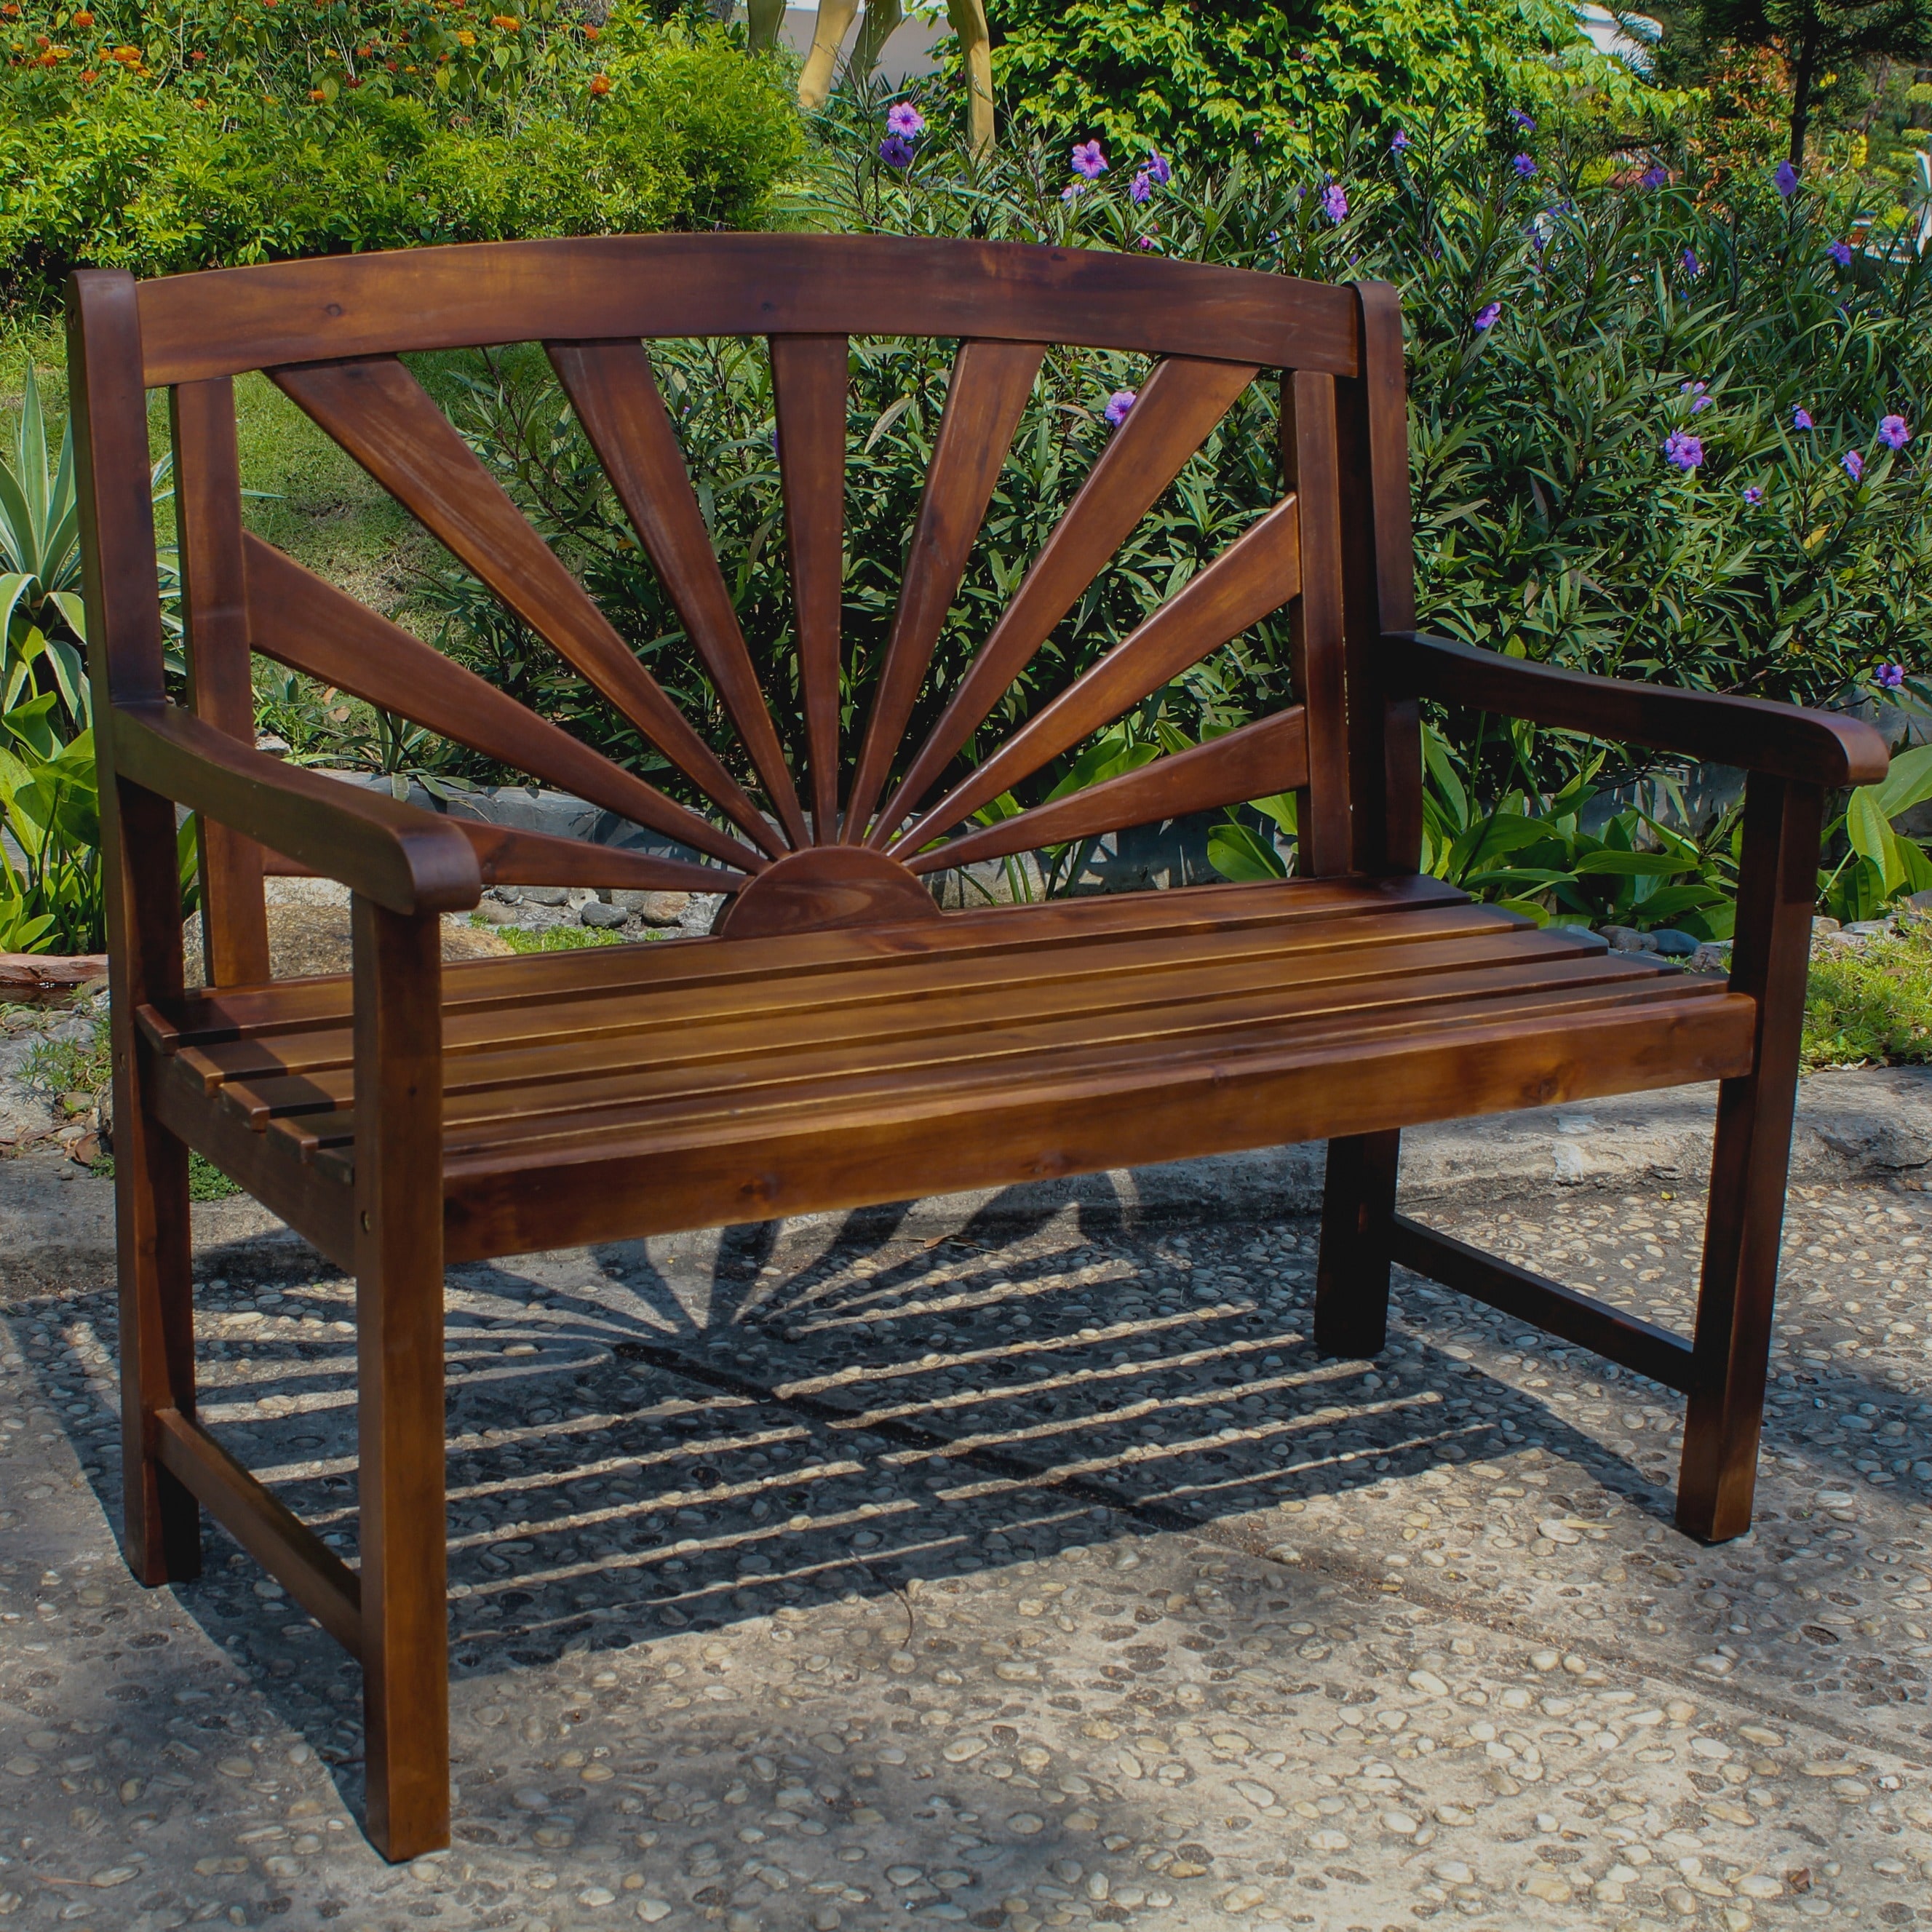 Garden Bench 3 Seater Patio Outdoor Metal Wood Picnic Chair